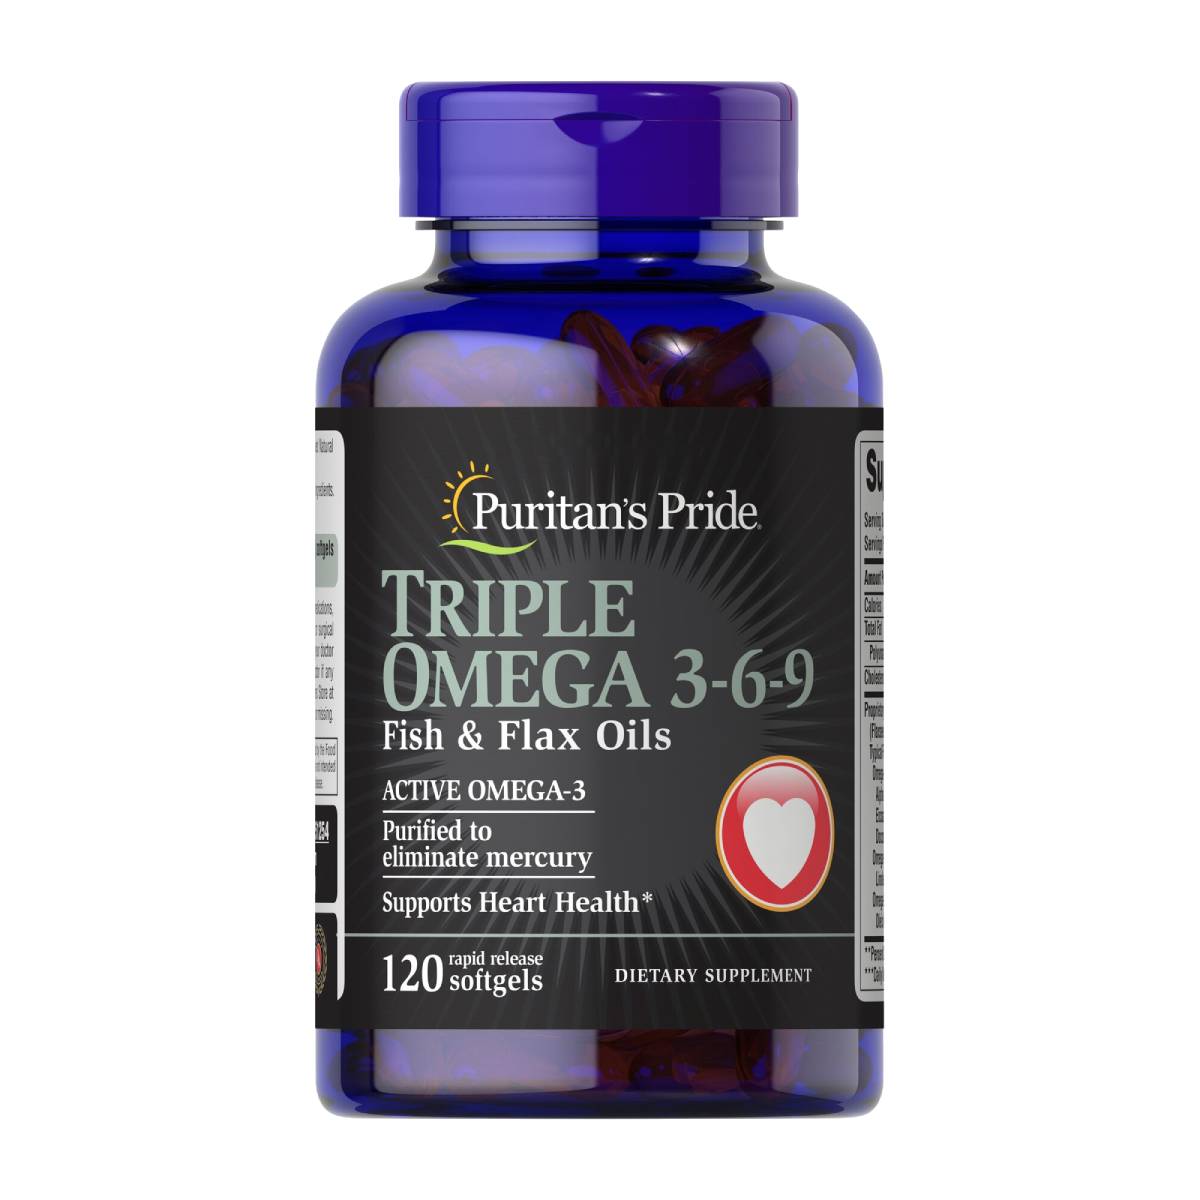 Puritan's Pride, Triple Omega 3-6-9 Fish & Flax Oils